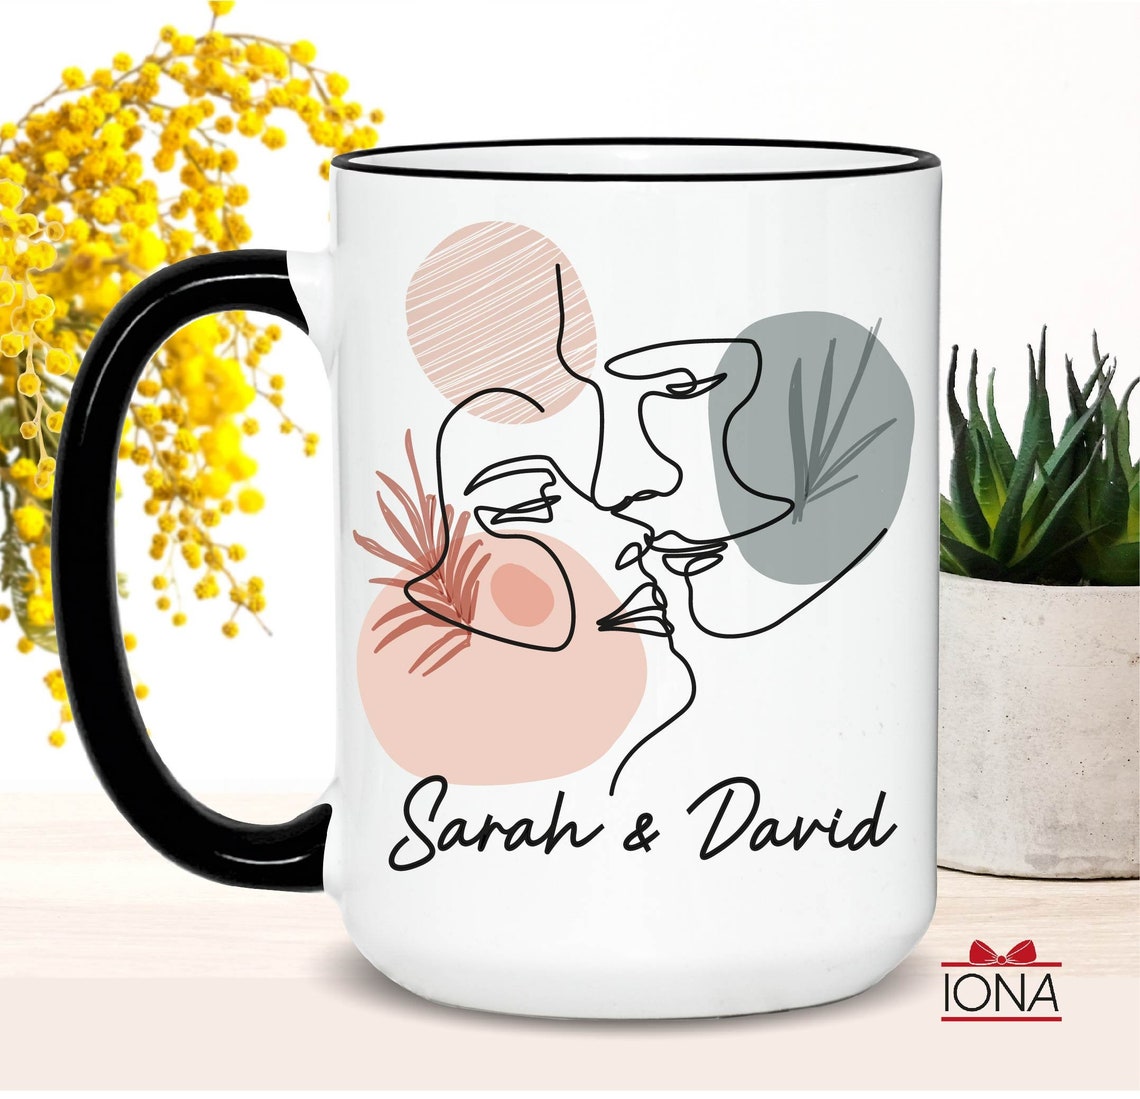 Personalized Couple Coffee Mug - Boyfriend Romantic Gifts - Romantic Gifts for Her - Line Art Mug